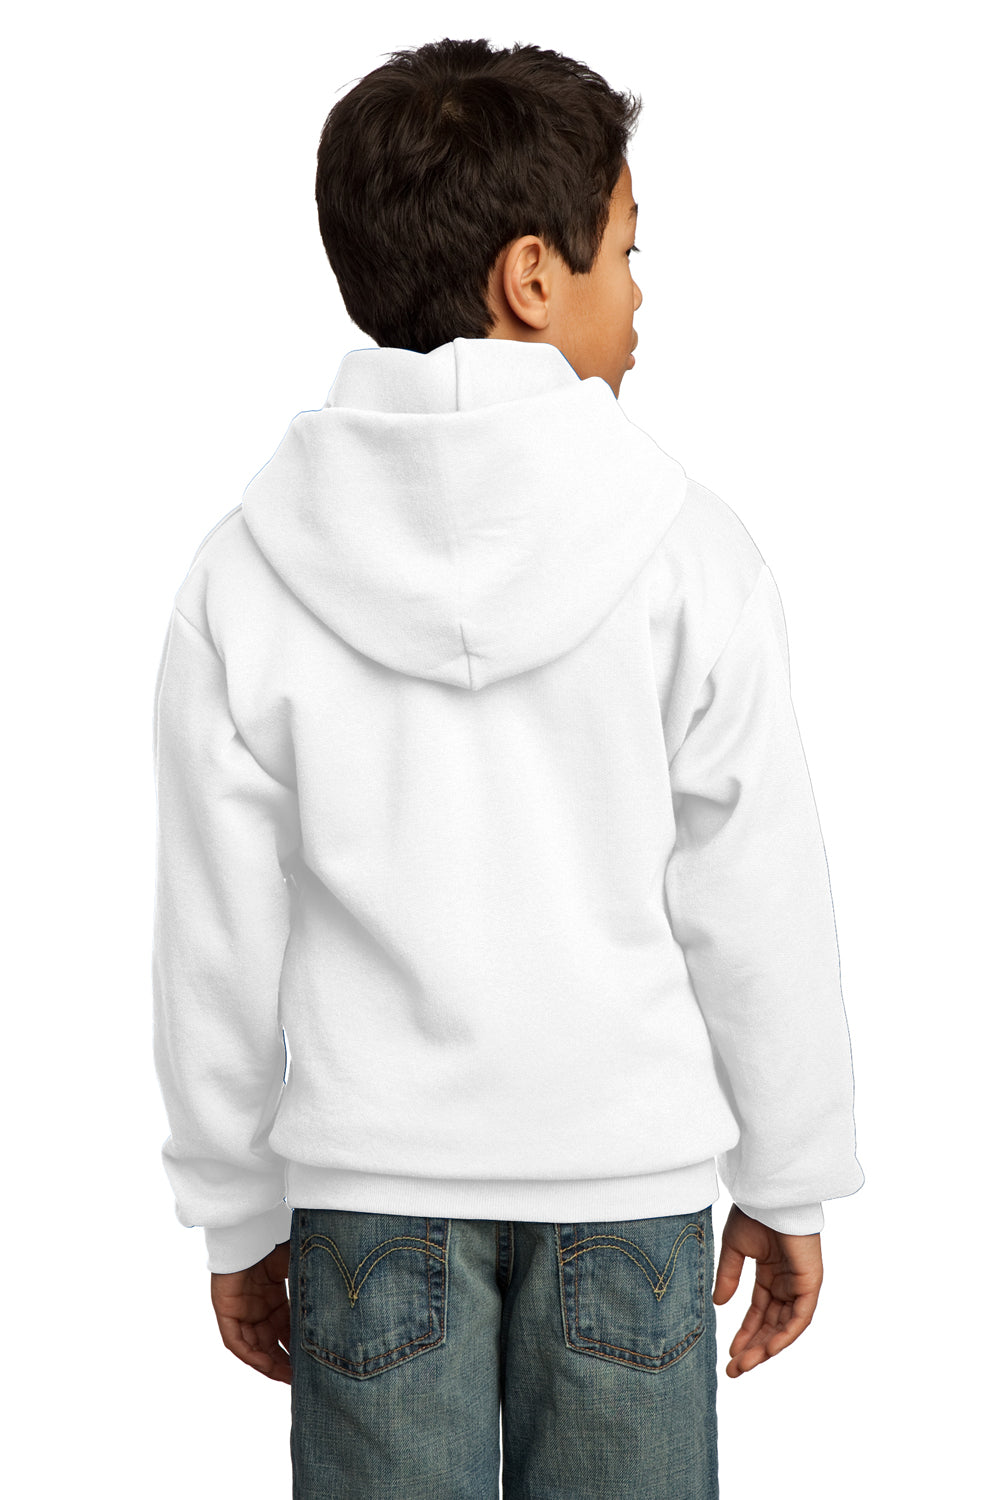 Port & Company PC90YH Youth Core Fleece Hooded Sweatshirt Hoodie White Back